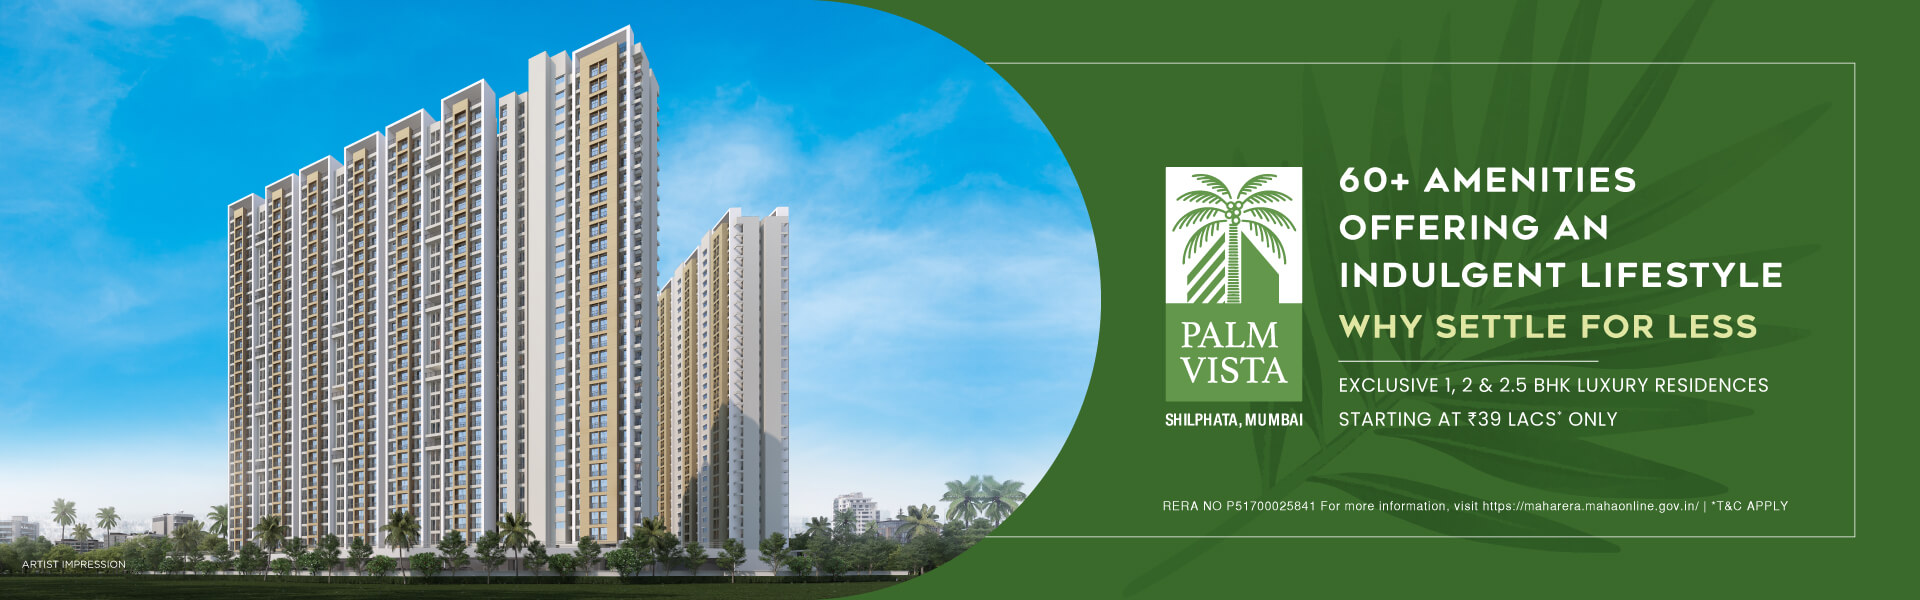 2.5 bhk flats in mumbai - Provident Palm Vista-bad15e3a